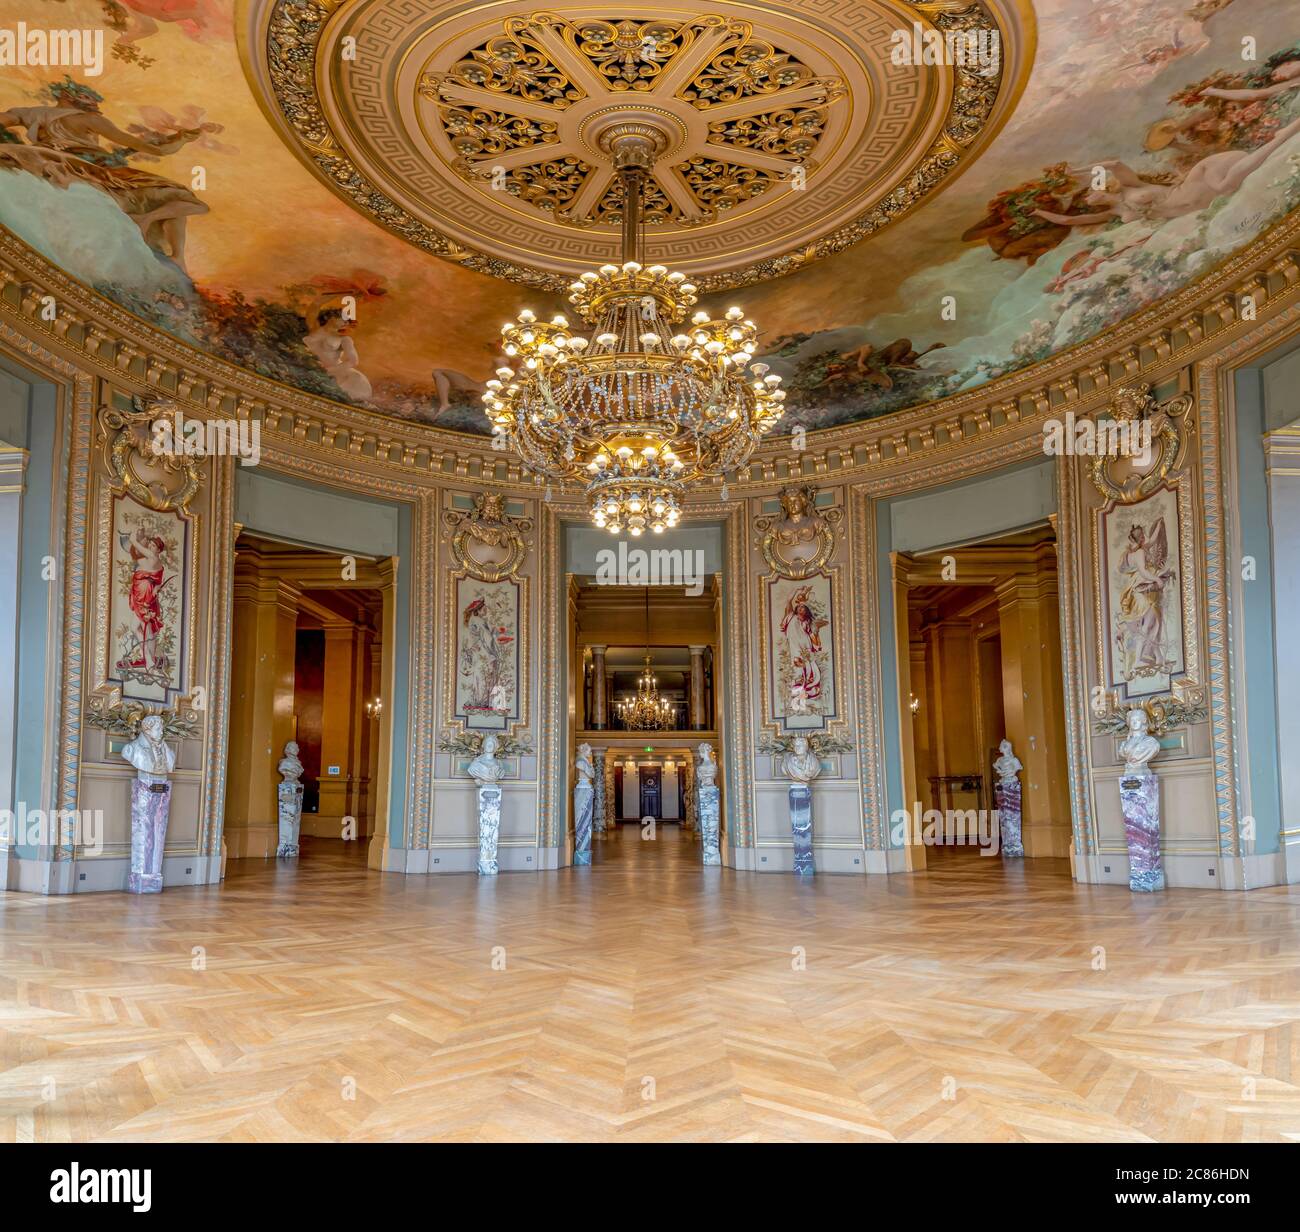 Paris, France - 06 19 2020: View inside Paris Opera Garnier Stock Photo -  Alamy